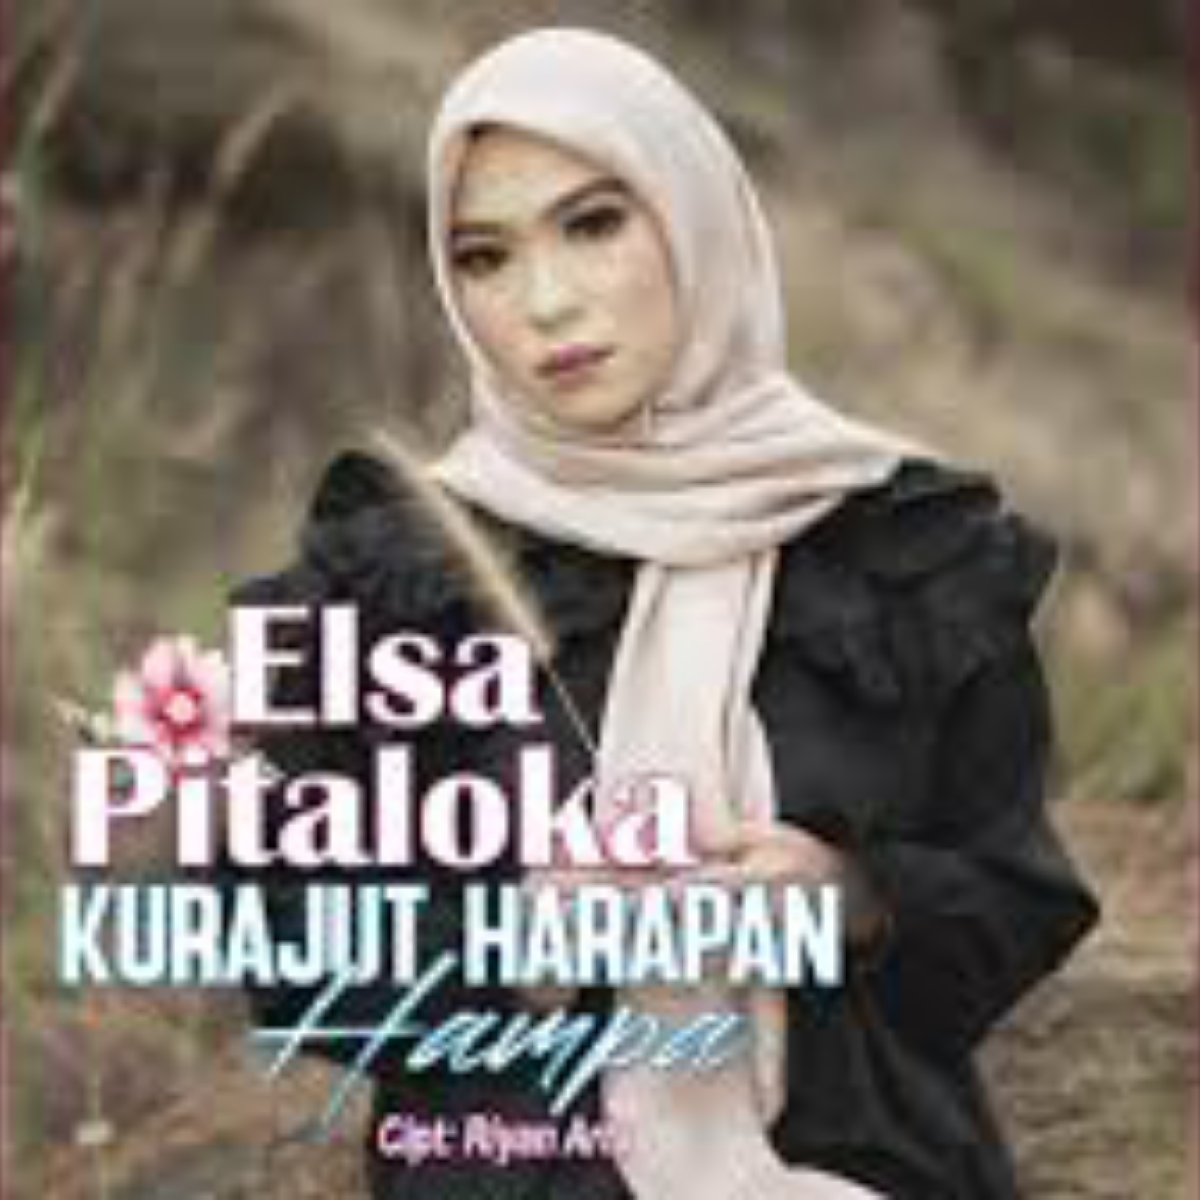 Set Elsa Pitaloka Cover mp3